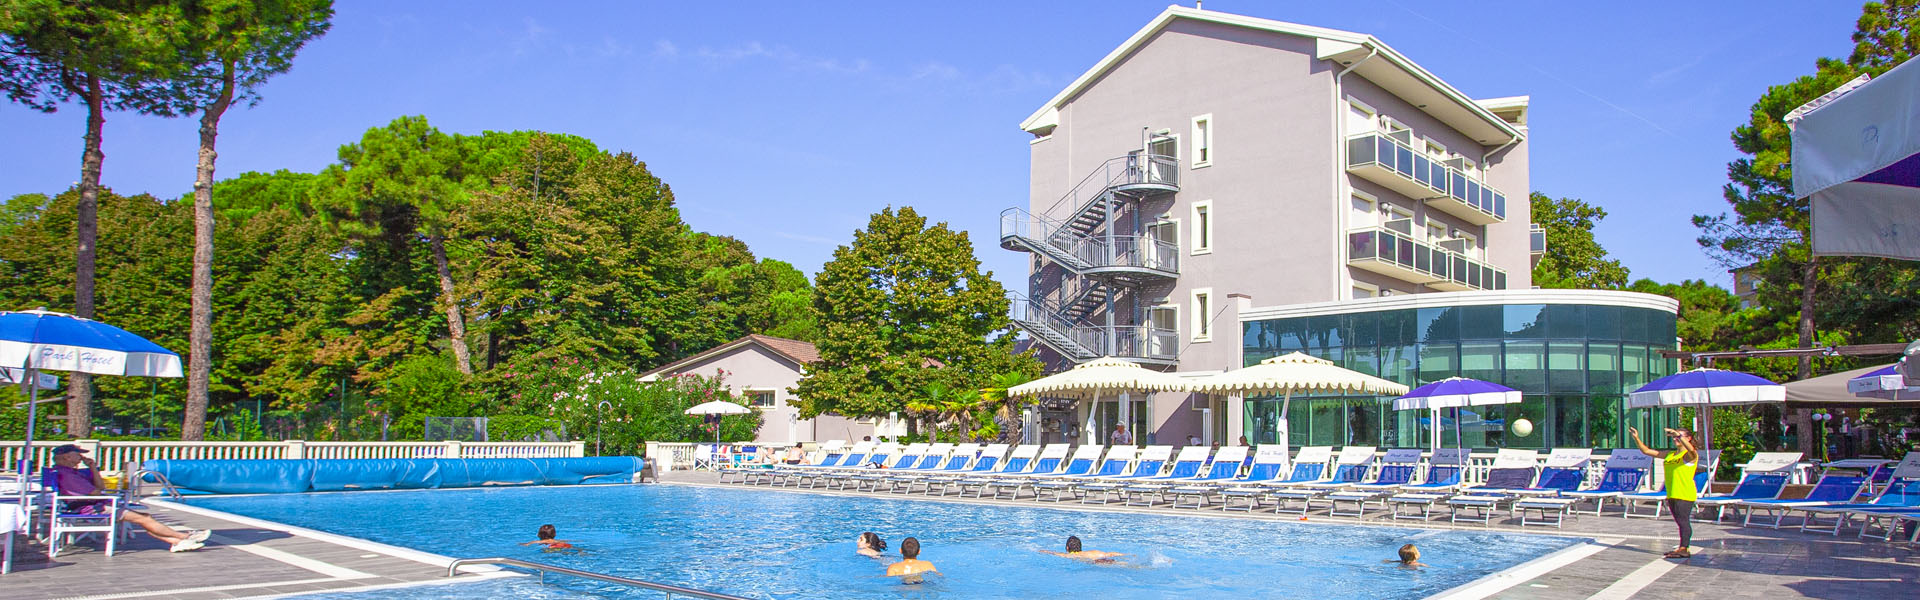 Sacchini Hotels | Park Hotel Zadina | Zadina Cesenatico Riviera Romagna